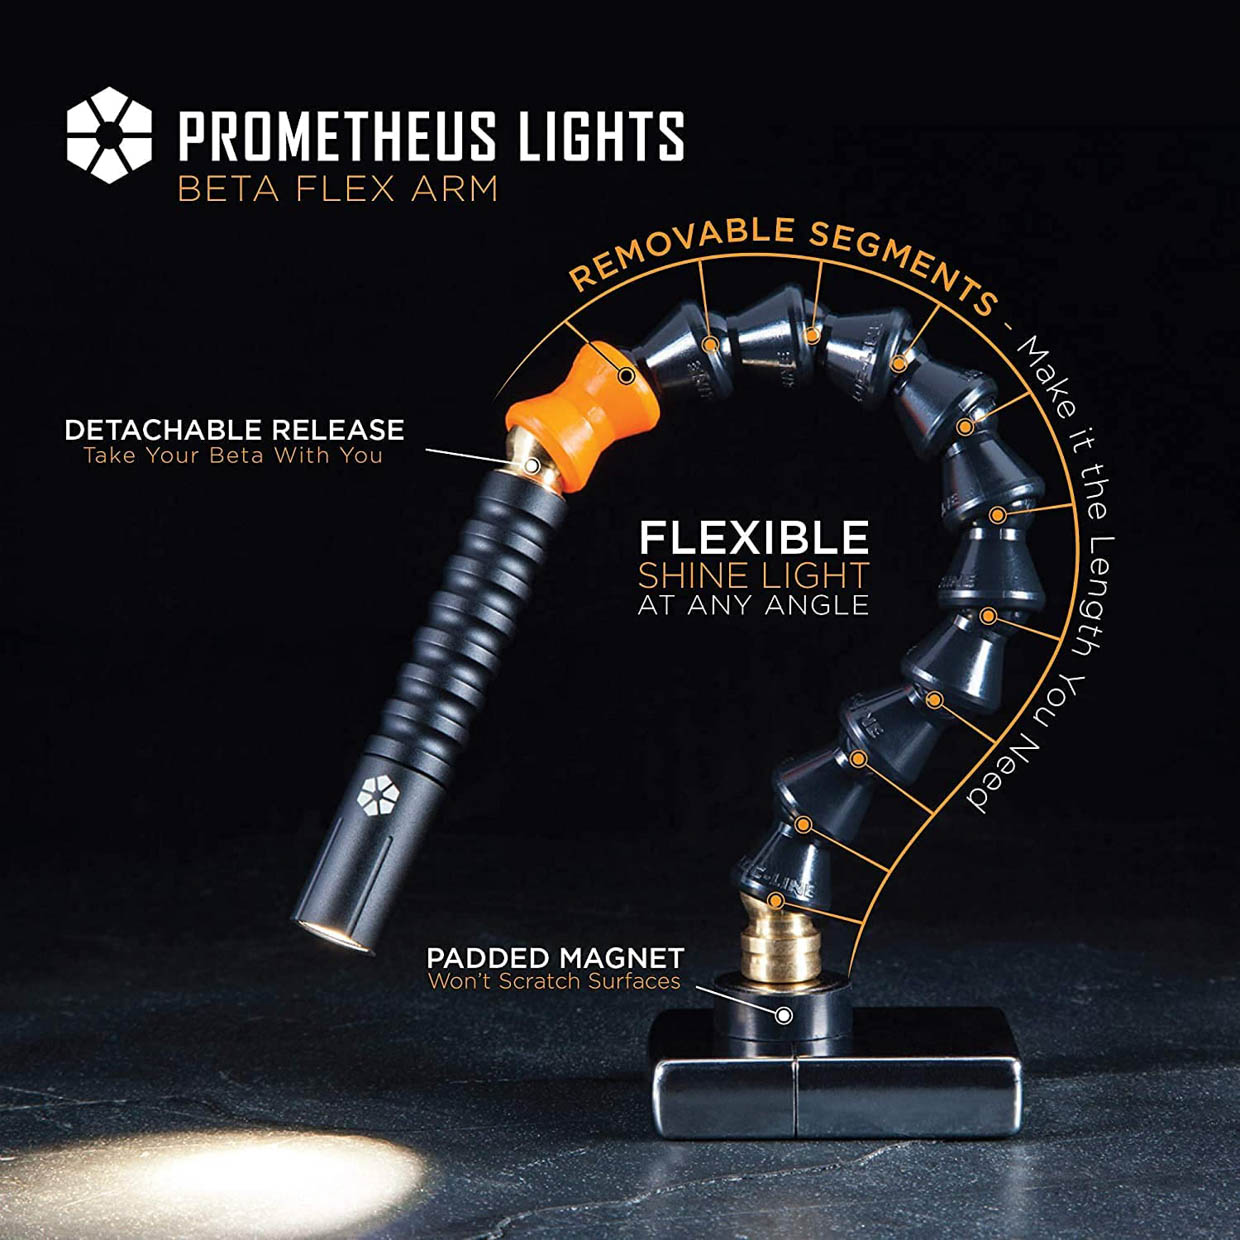 Prometheus Lights Beta Flex Arm Flashlight Kit